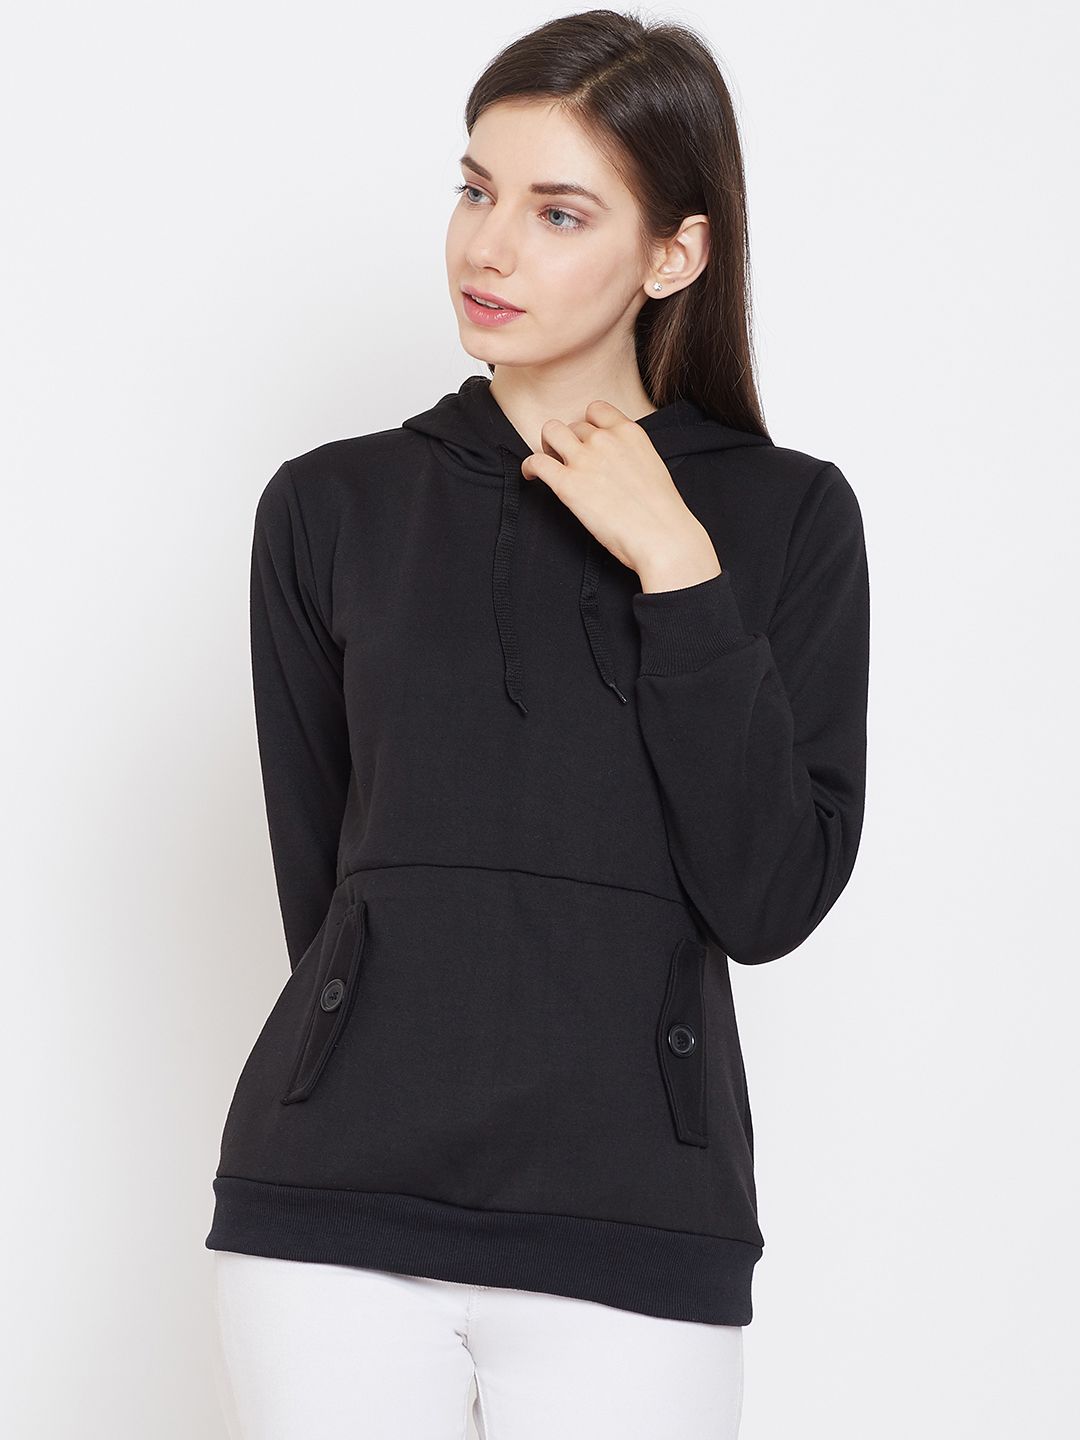 Belle Fille Women Black Solid Hooded Sweatshirt Price in India